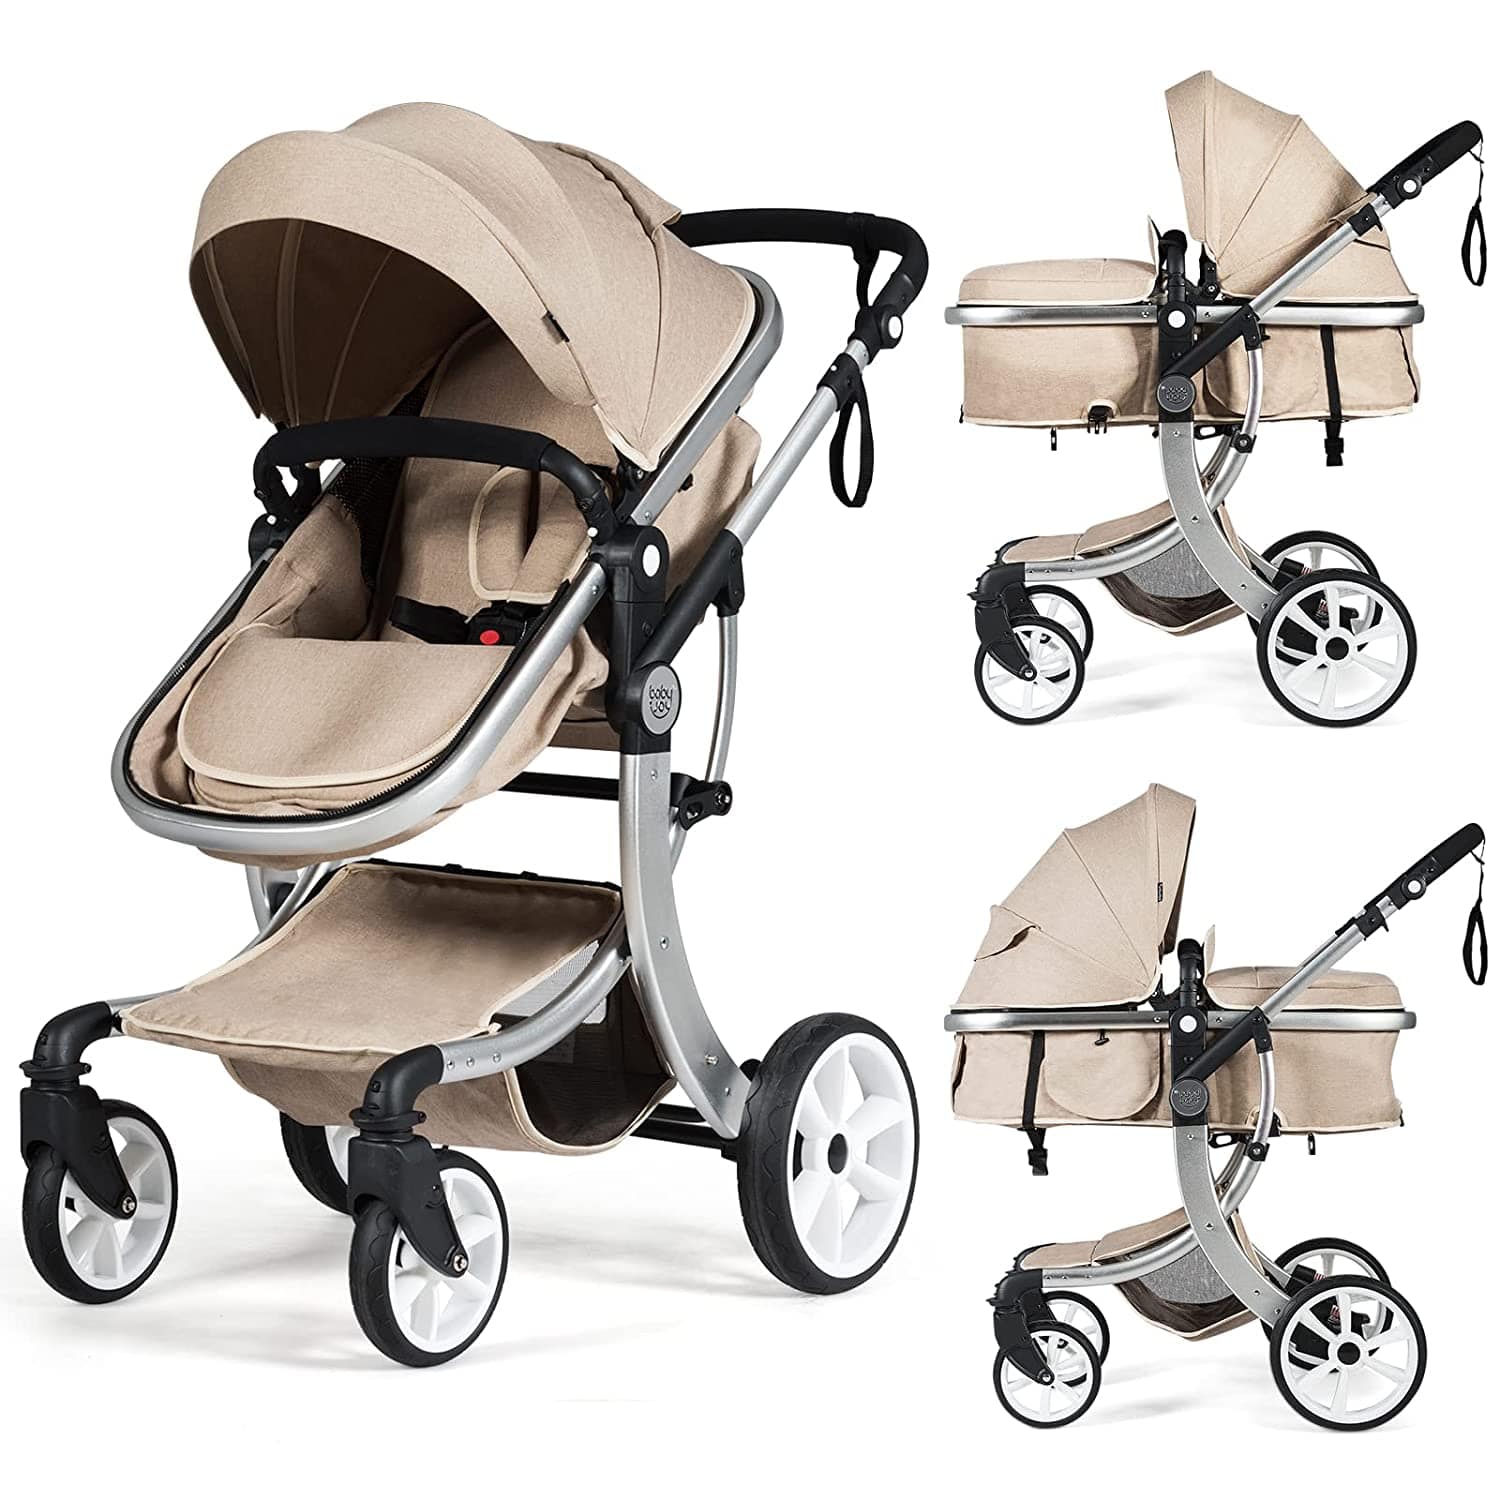 BabyJoy 2 in 1 Convertible Baby Stroller I Portable Baby/Infant Stroller